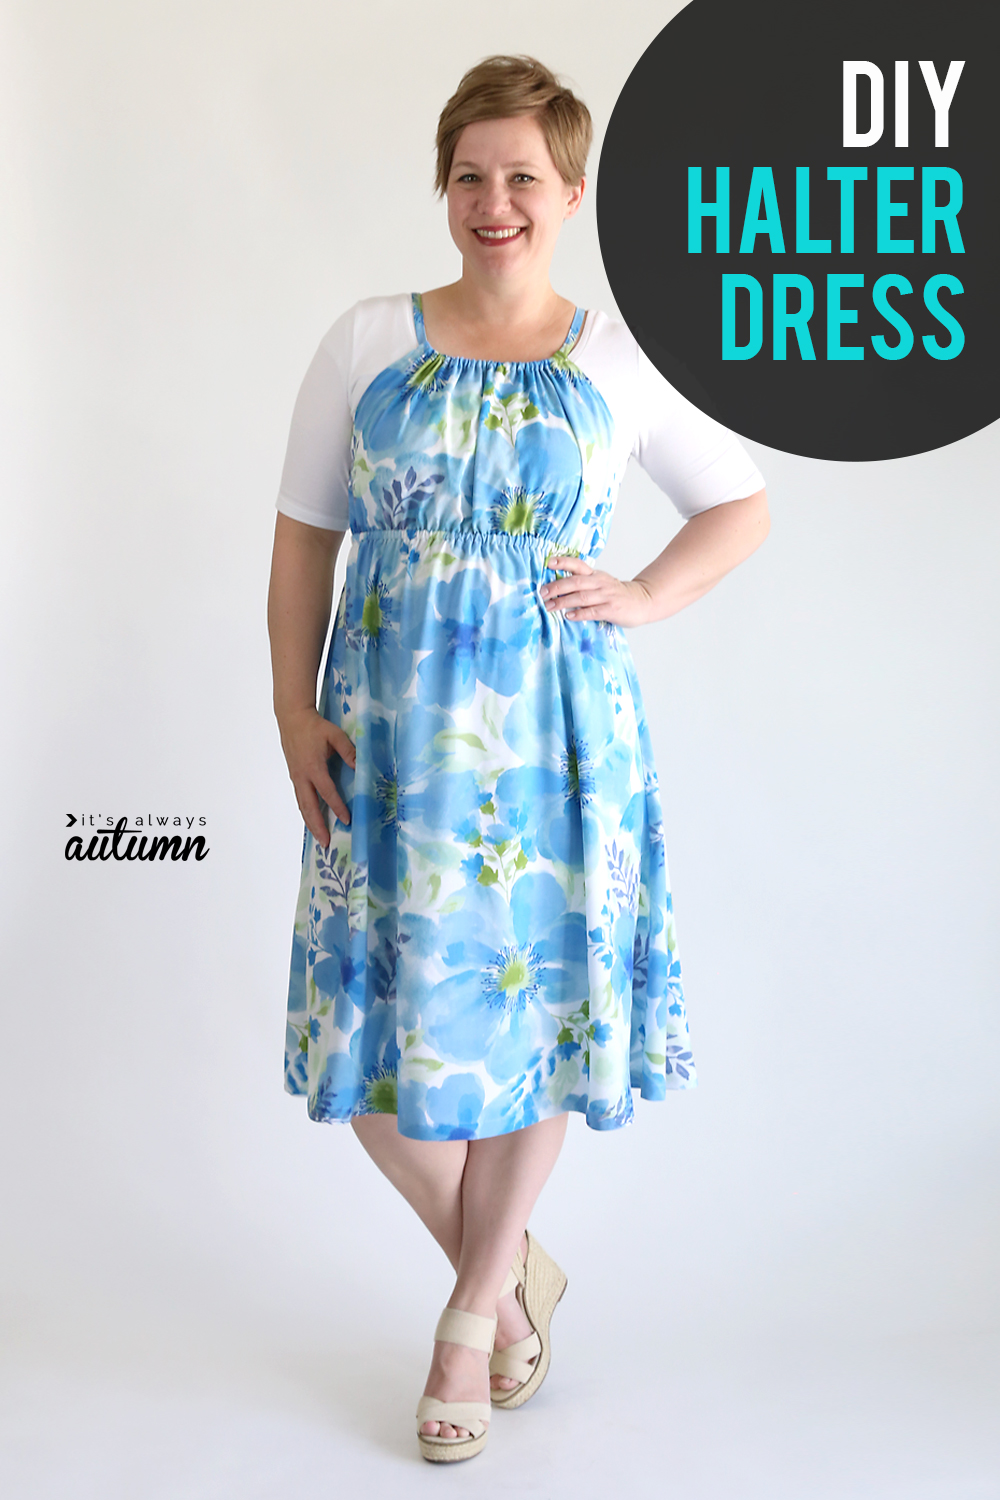 DIY halter dress {easy sewing tutorial} - It's Always Autumn